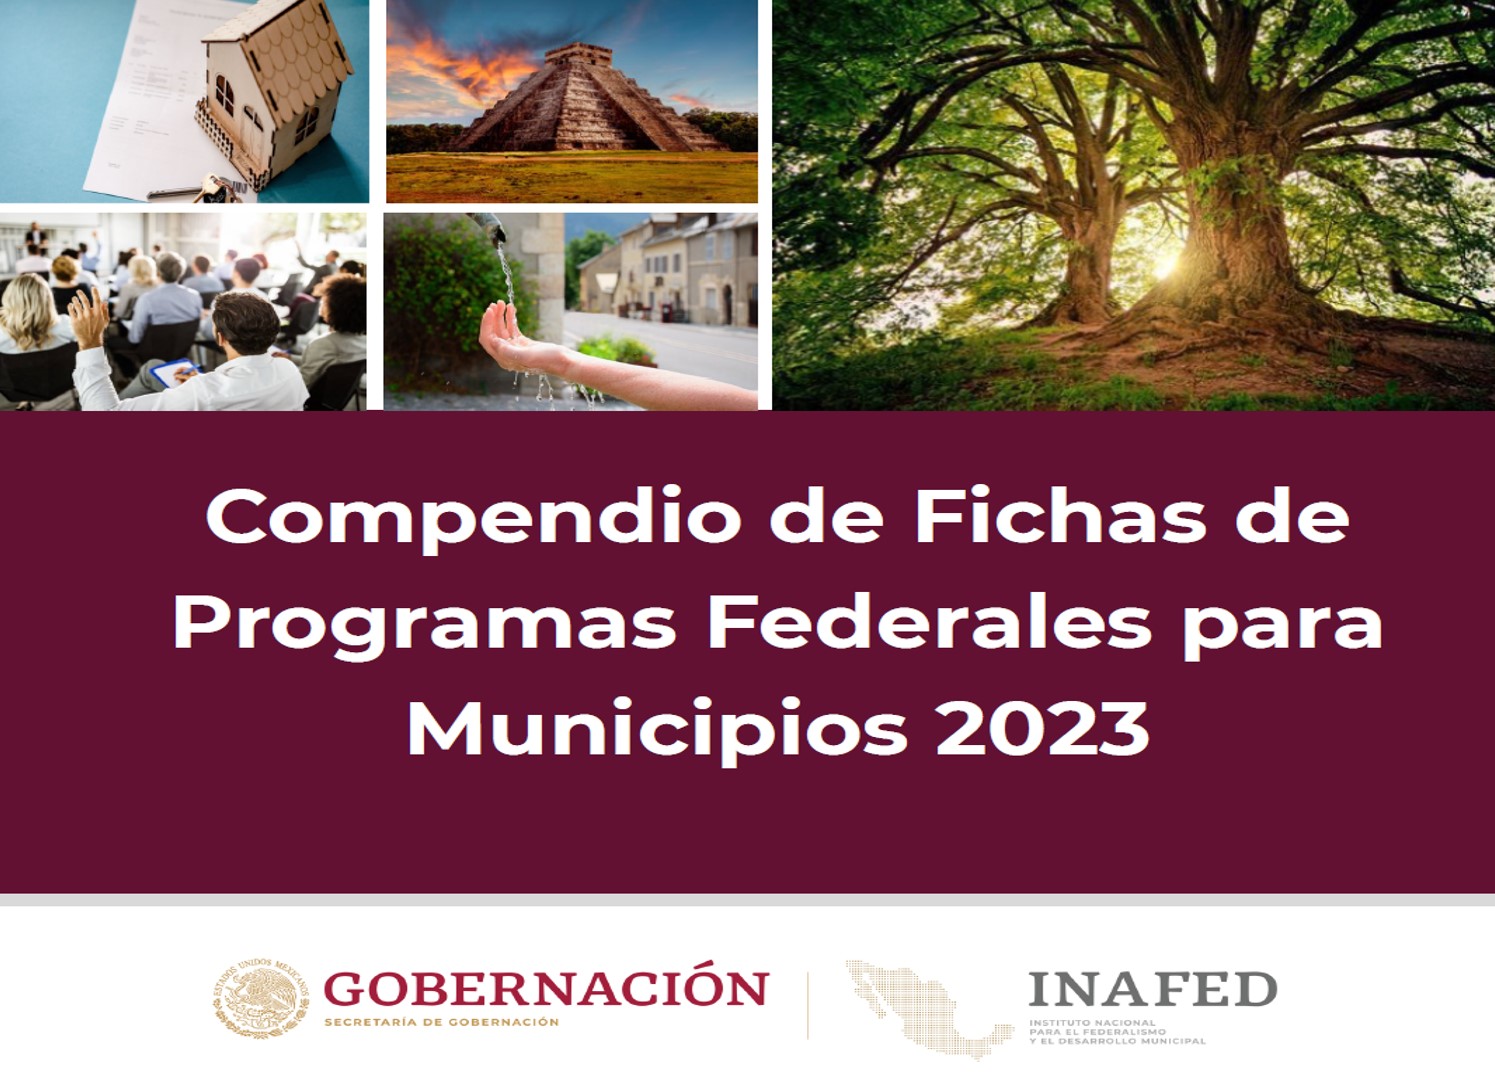 Compendio de Fichas de Programas Federales para Municipios 2023.